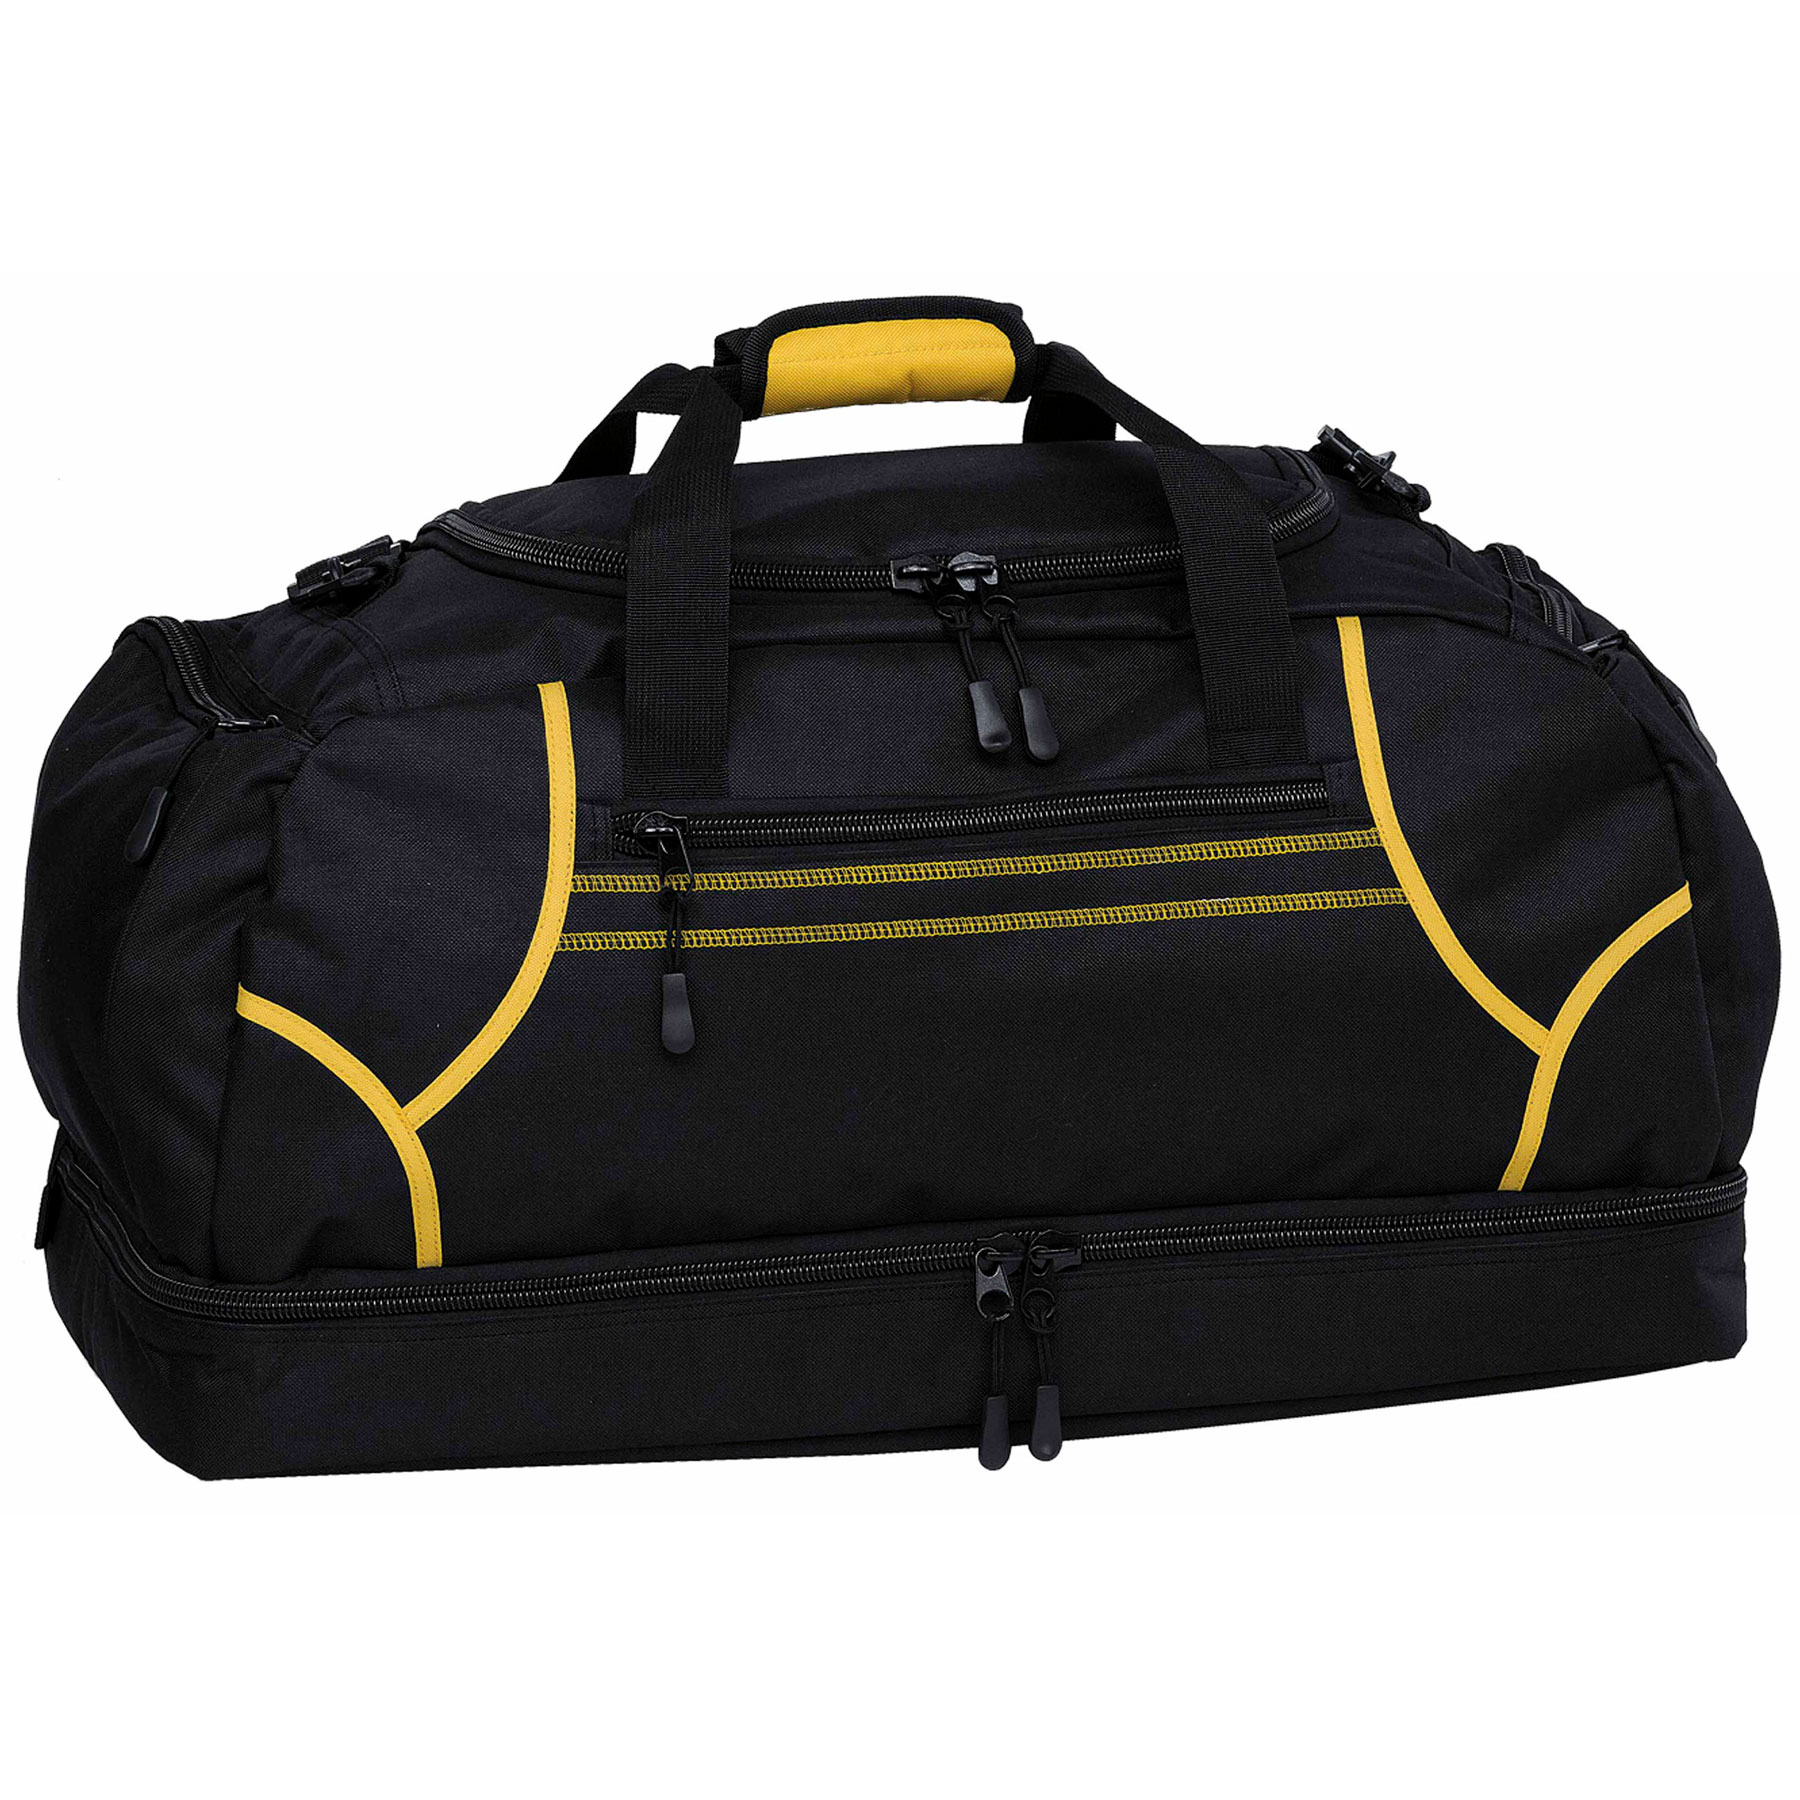 https://www.gearforlife.com.au/wp-content/uploads/reflex-sports-bag-black_gold.jpg